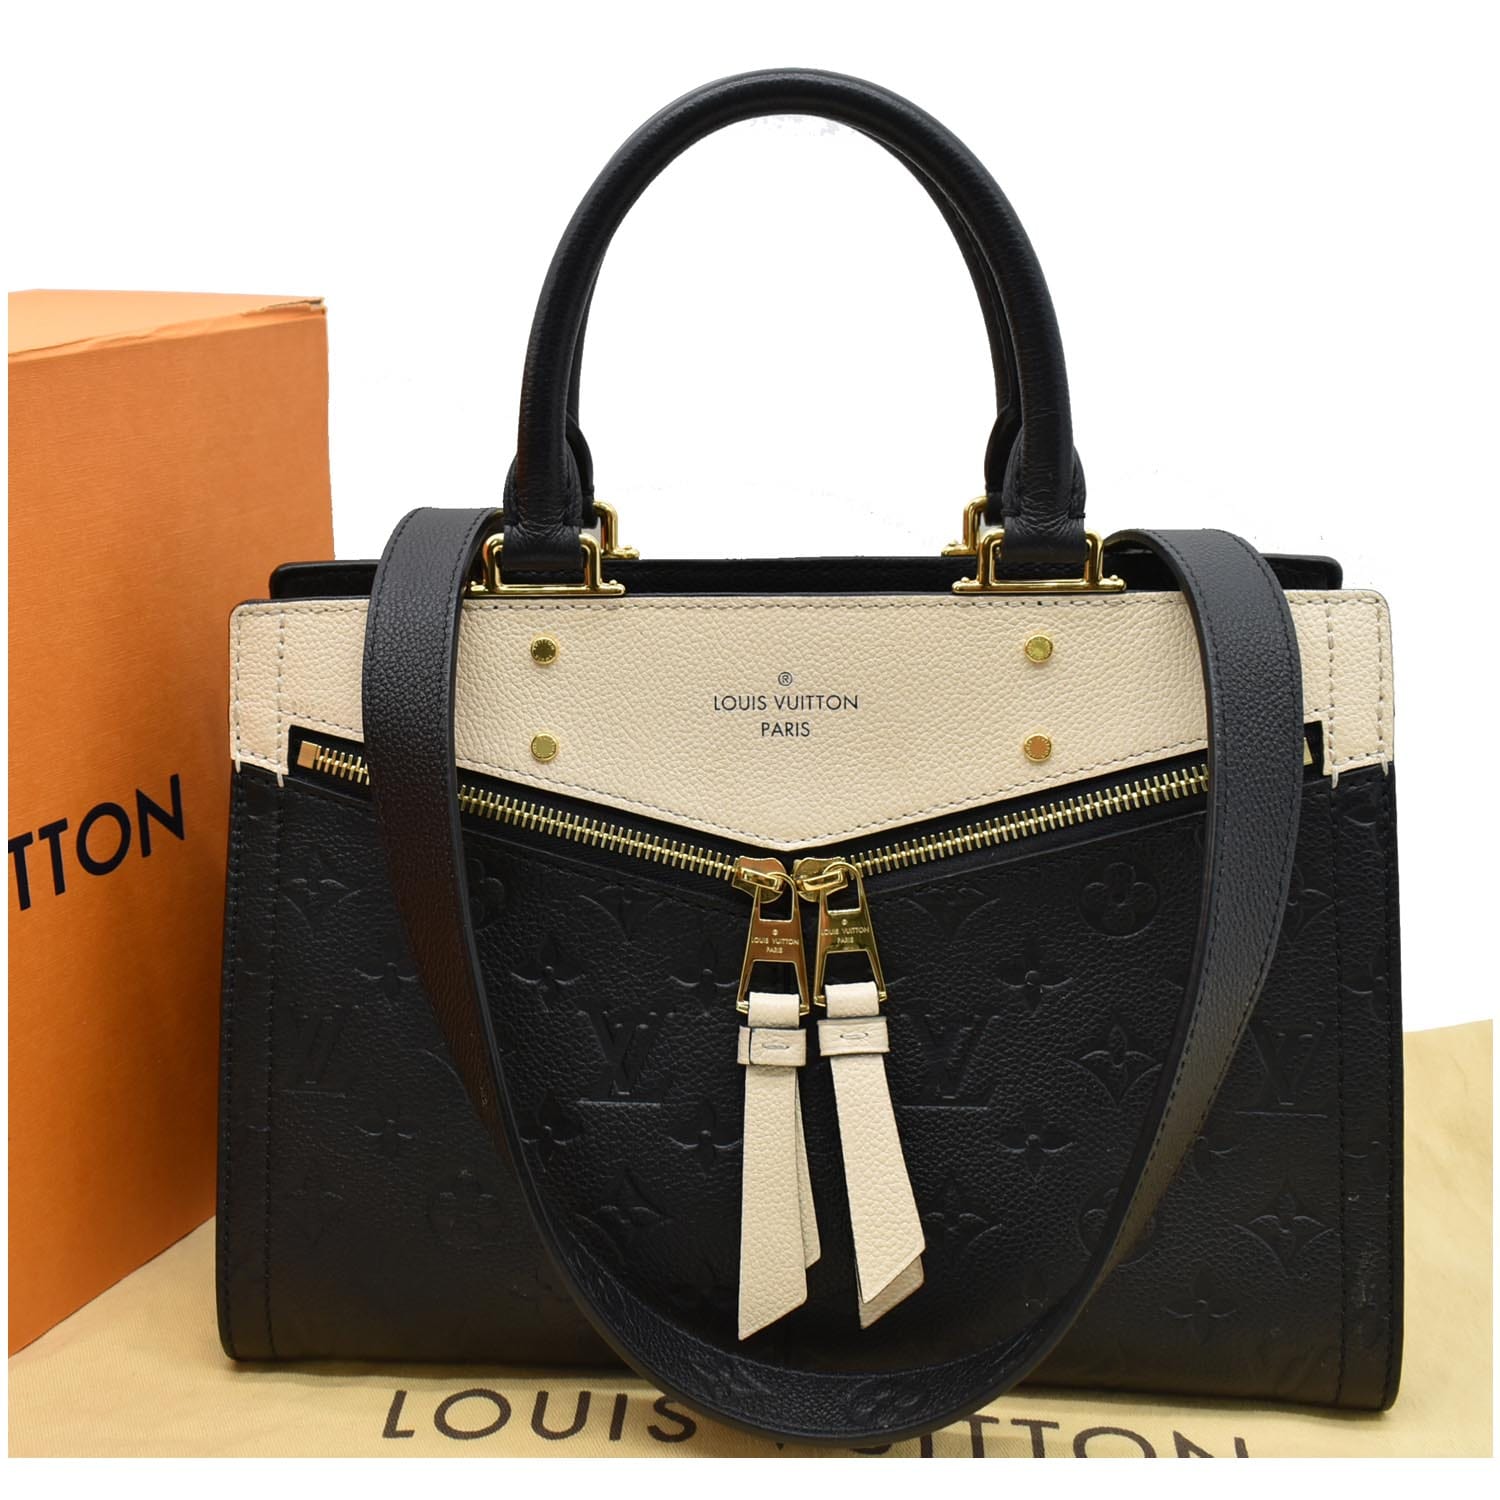 Handbags Louis Vuitton Louis Vuitton Sully PM Bag in Black Leather